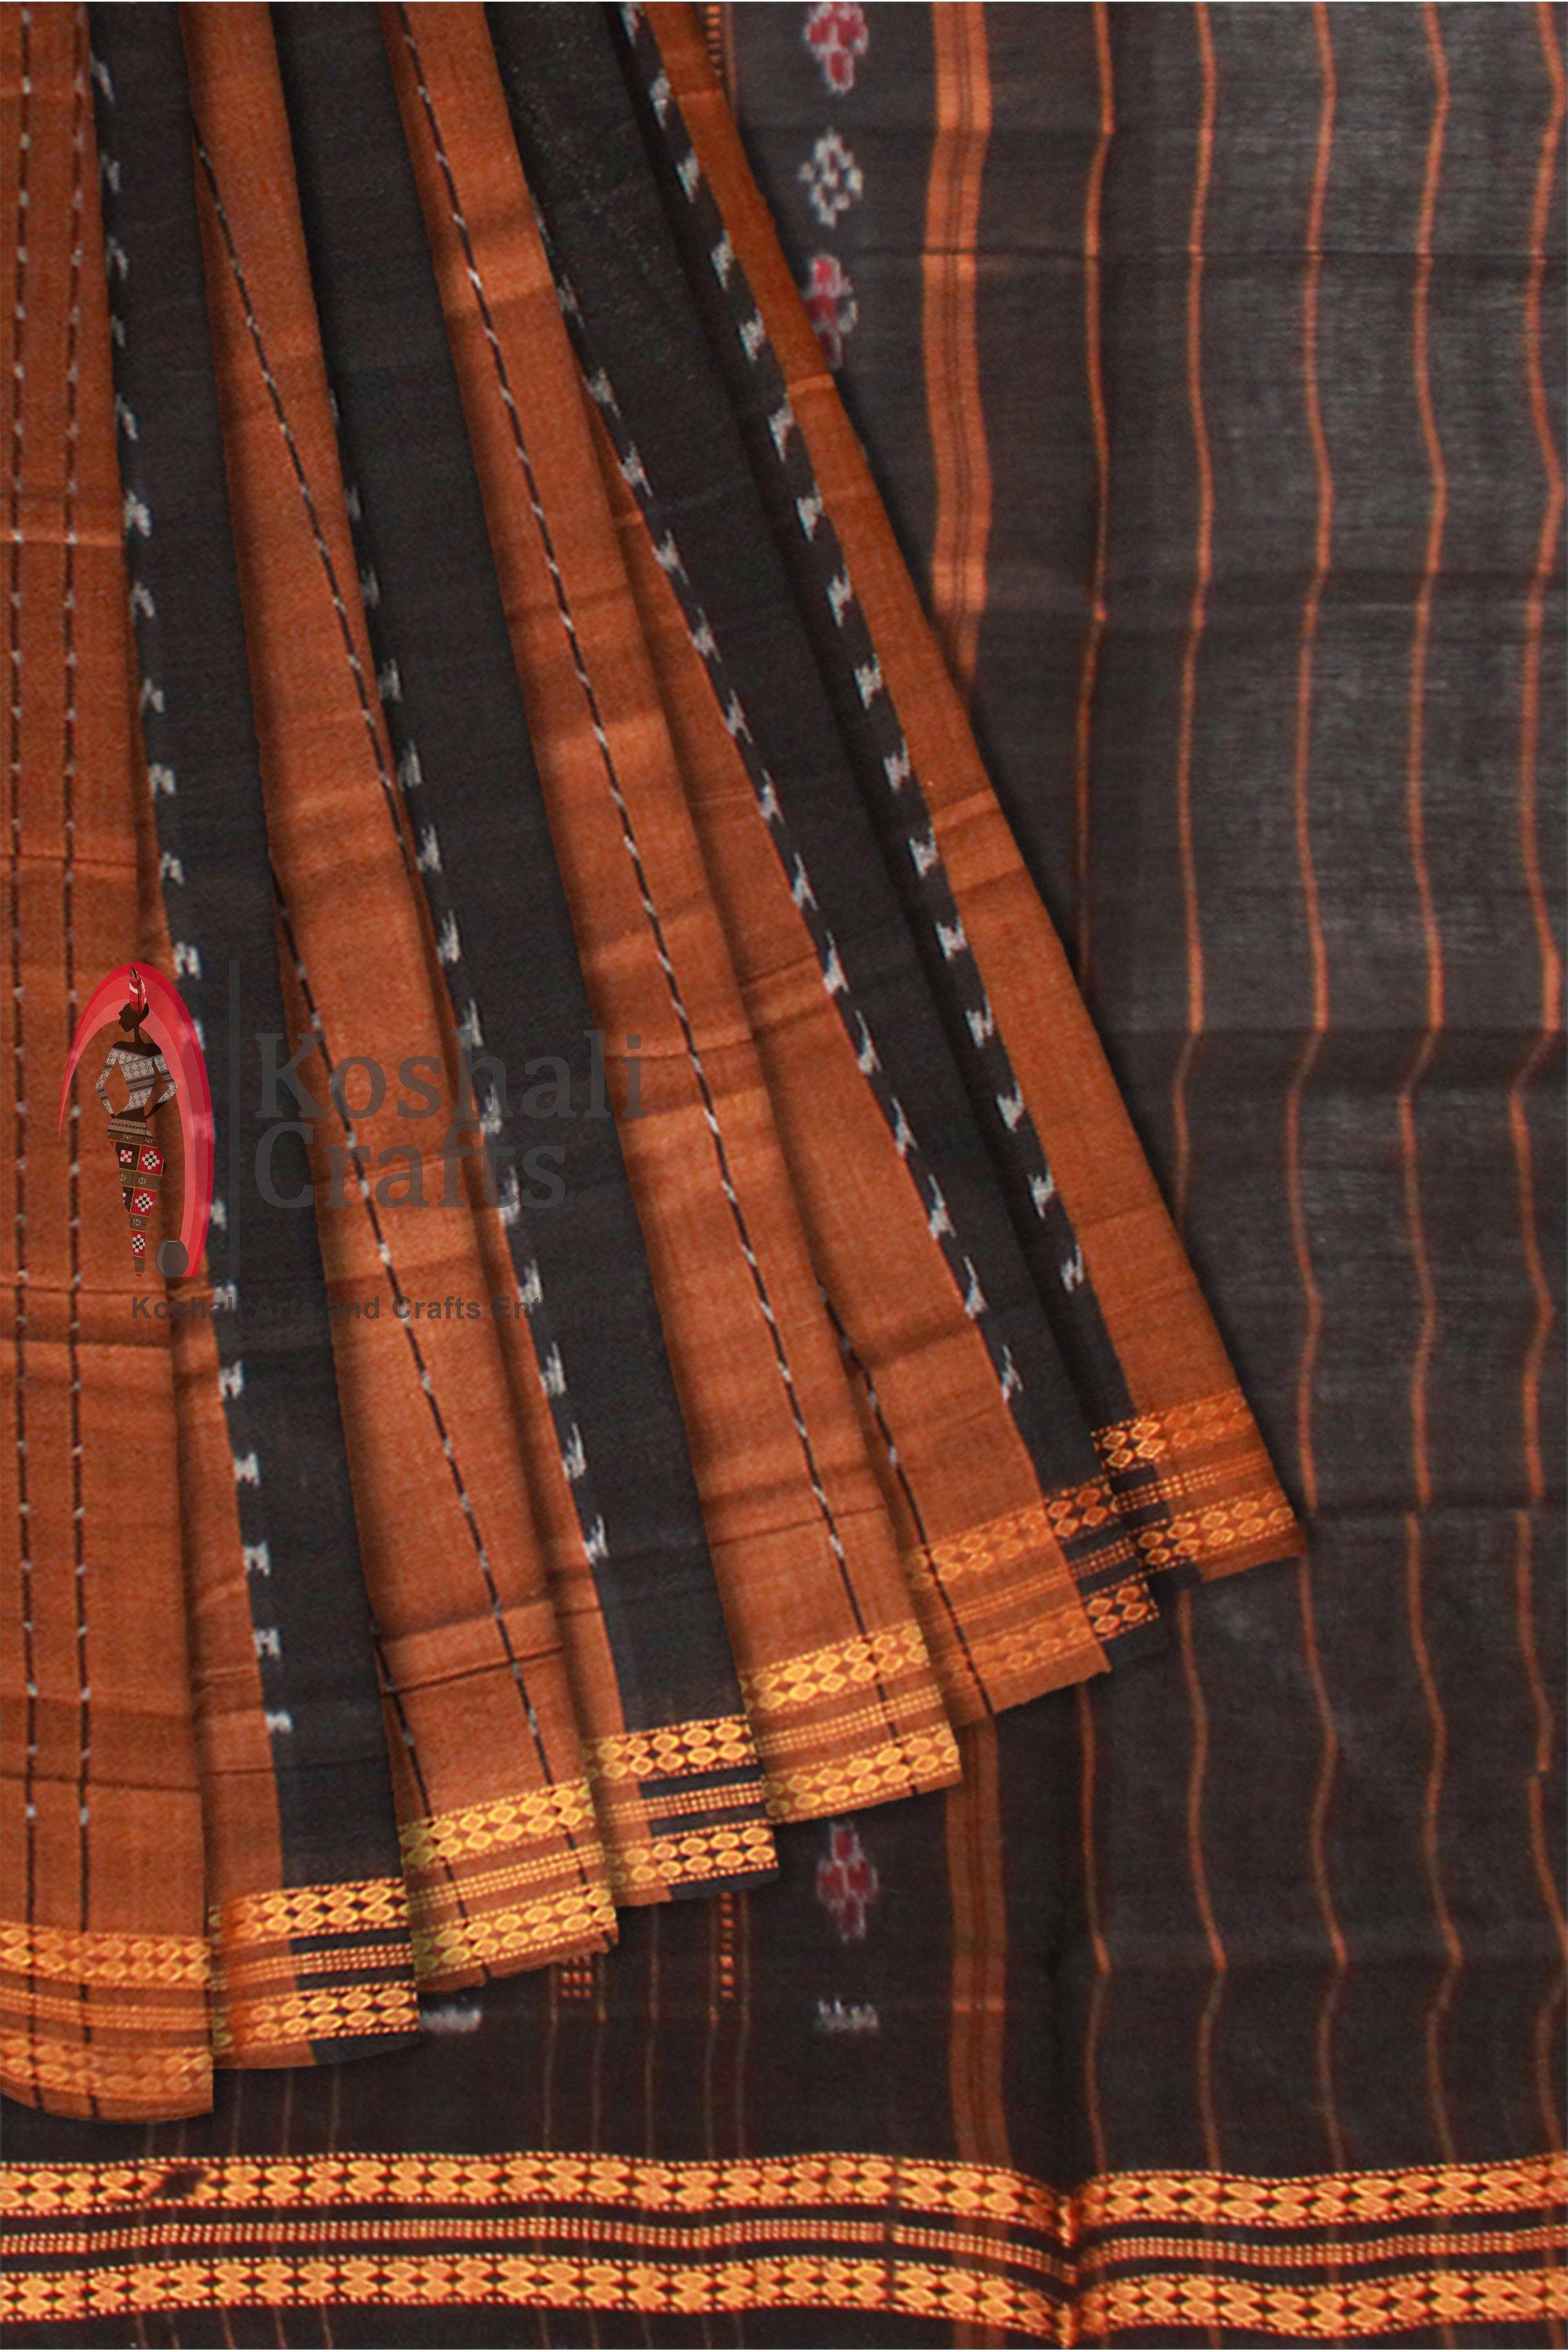 Brown color Sambalpuri cotton saree, without Blouse piece. - Koshali Arts & Crafts Enterprise